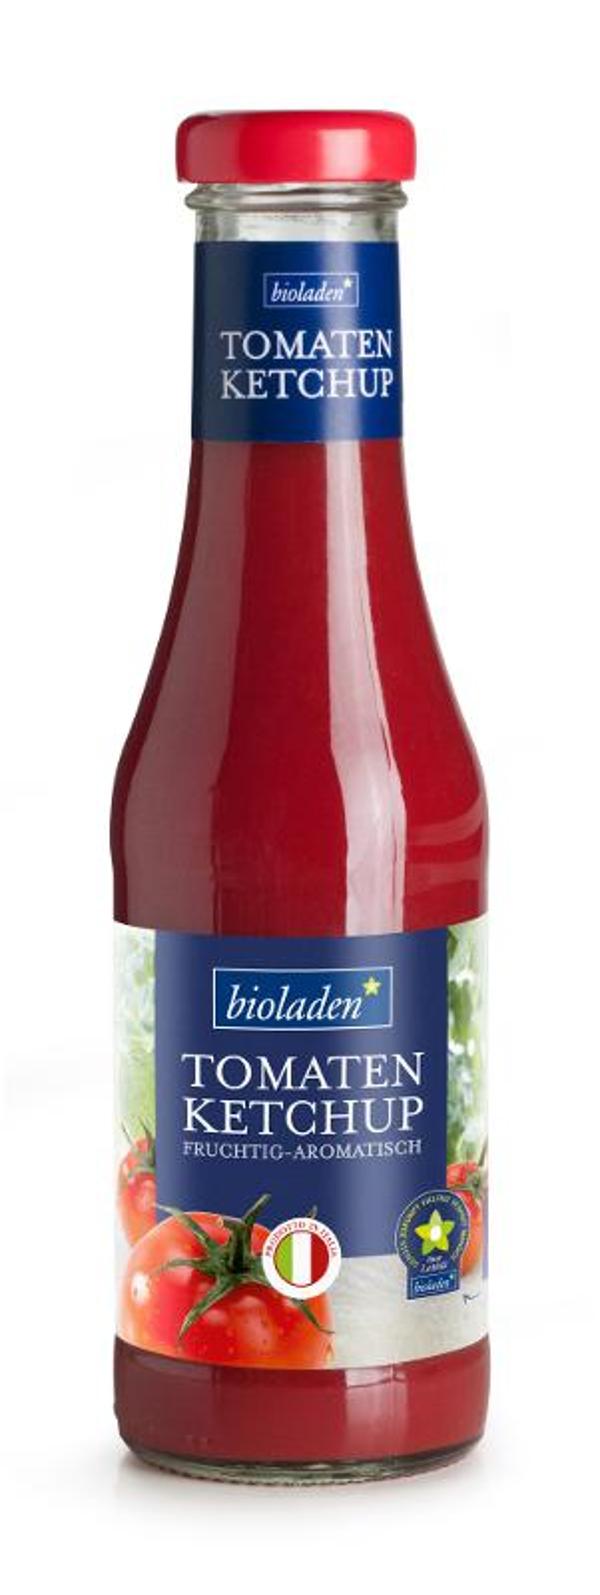 Produktfoto zu Tomatenketchup, 450 ml